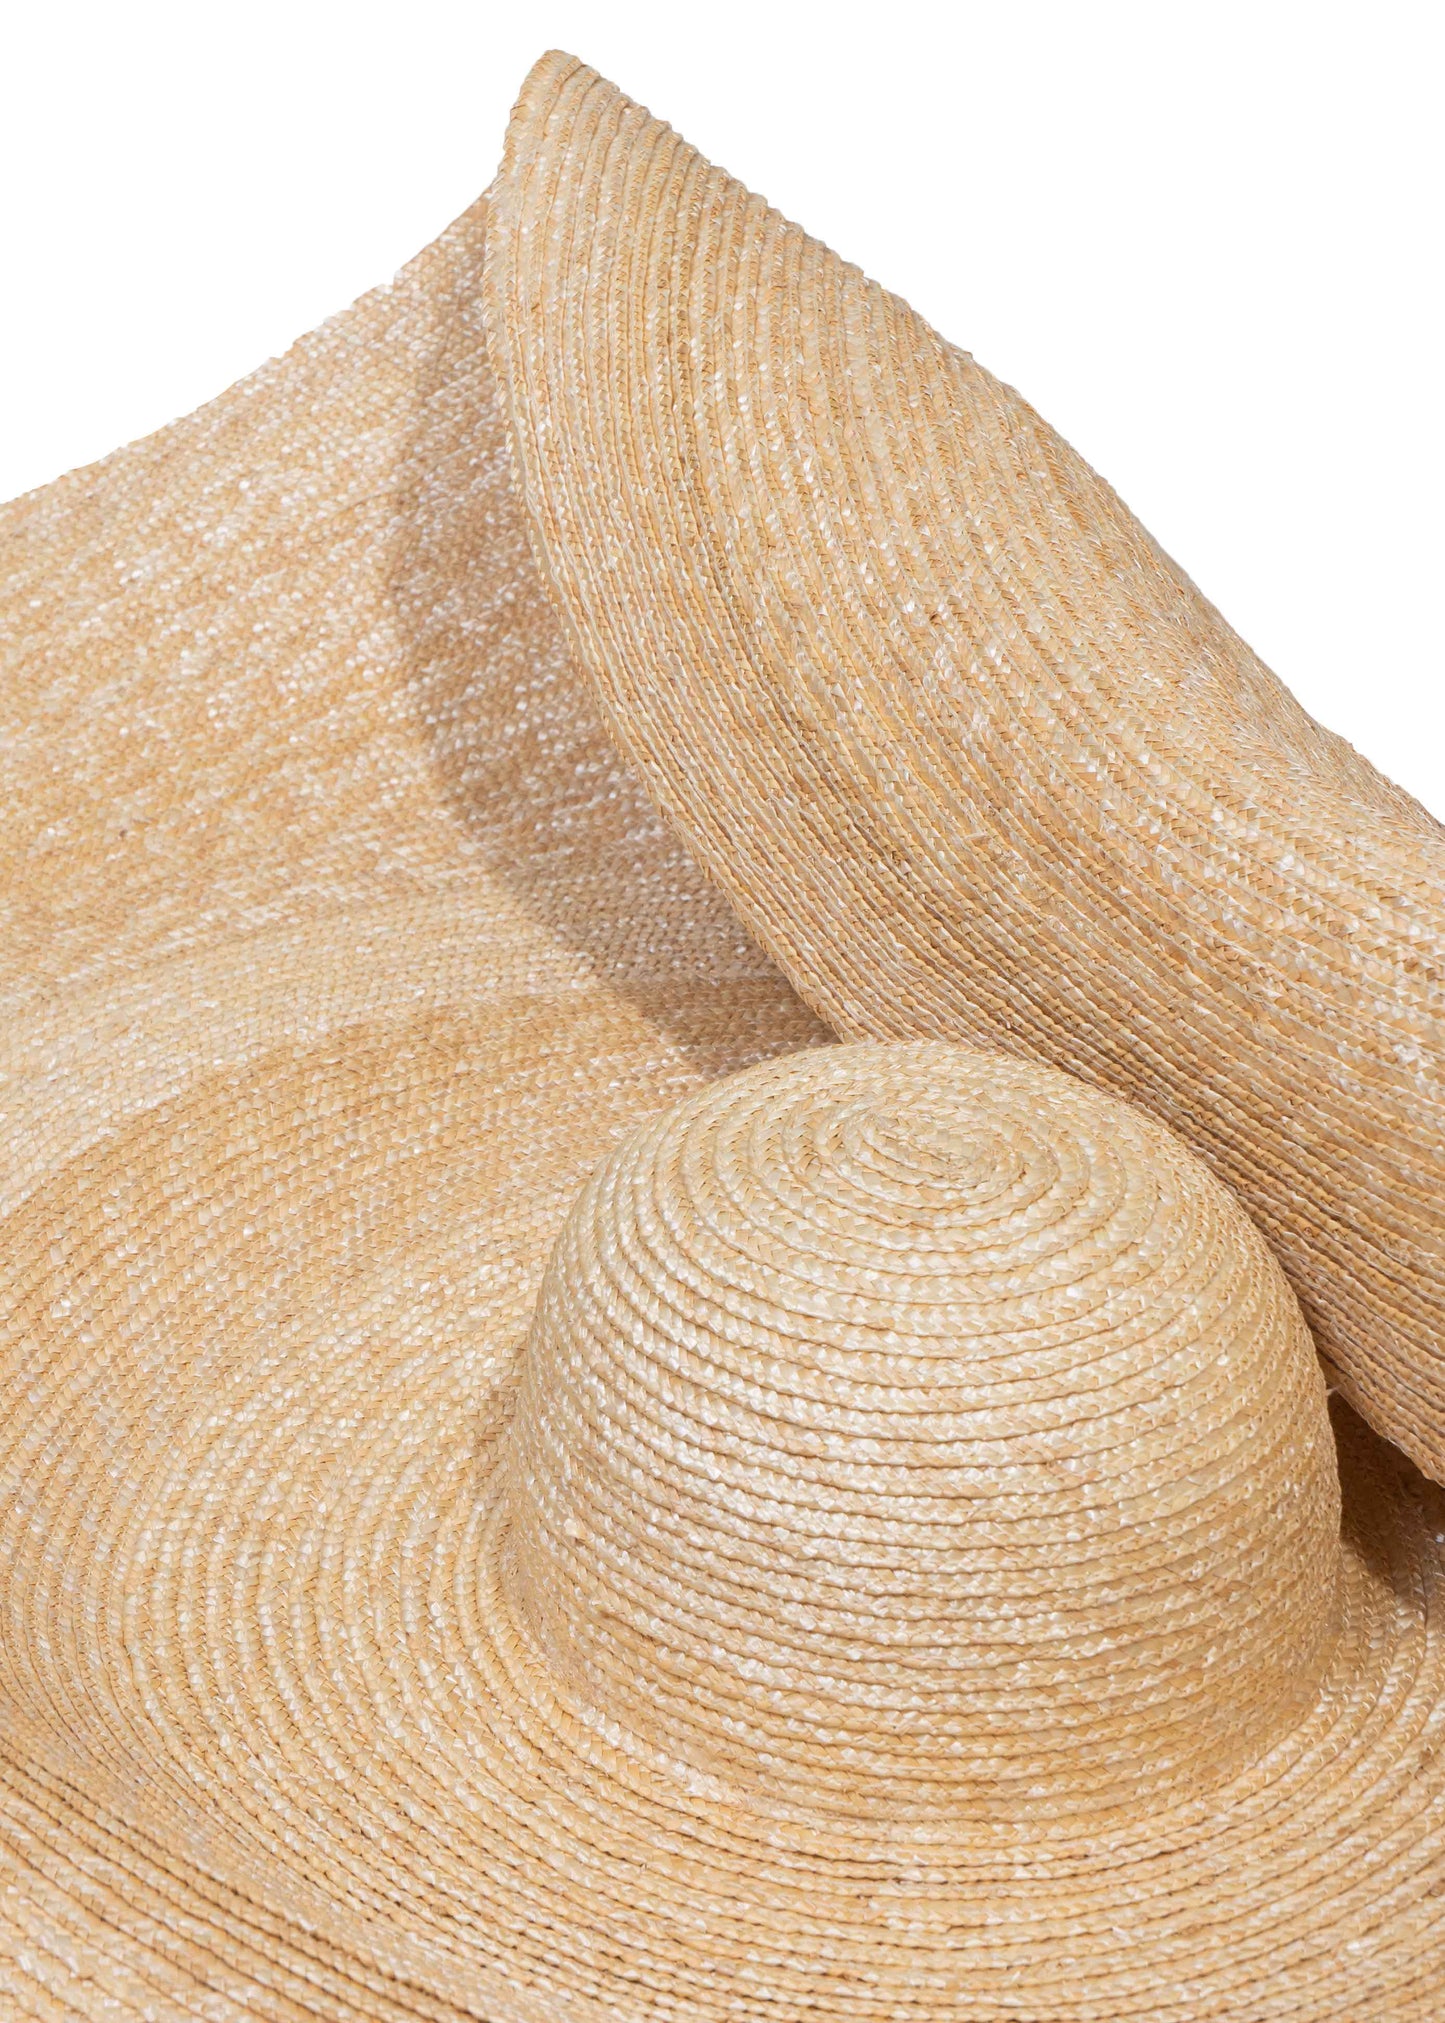 Savannah, Wheat Straw Hat